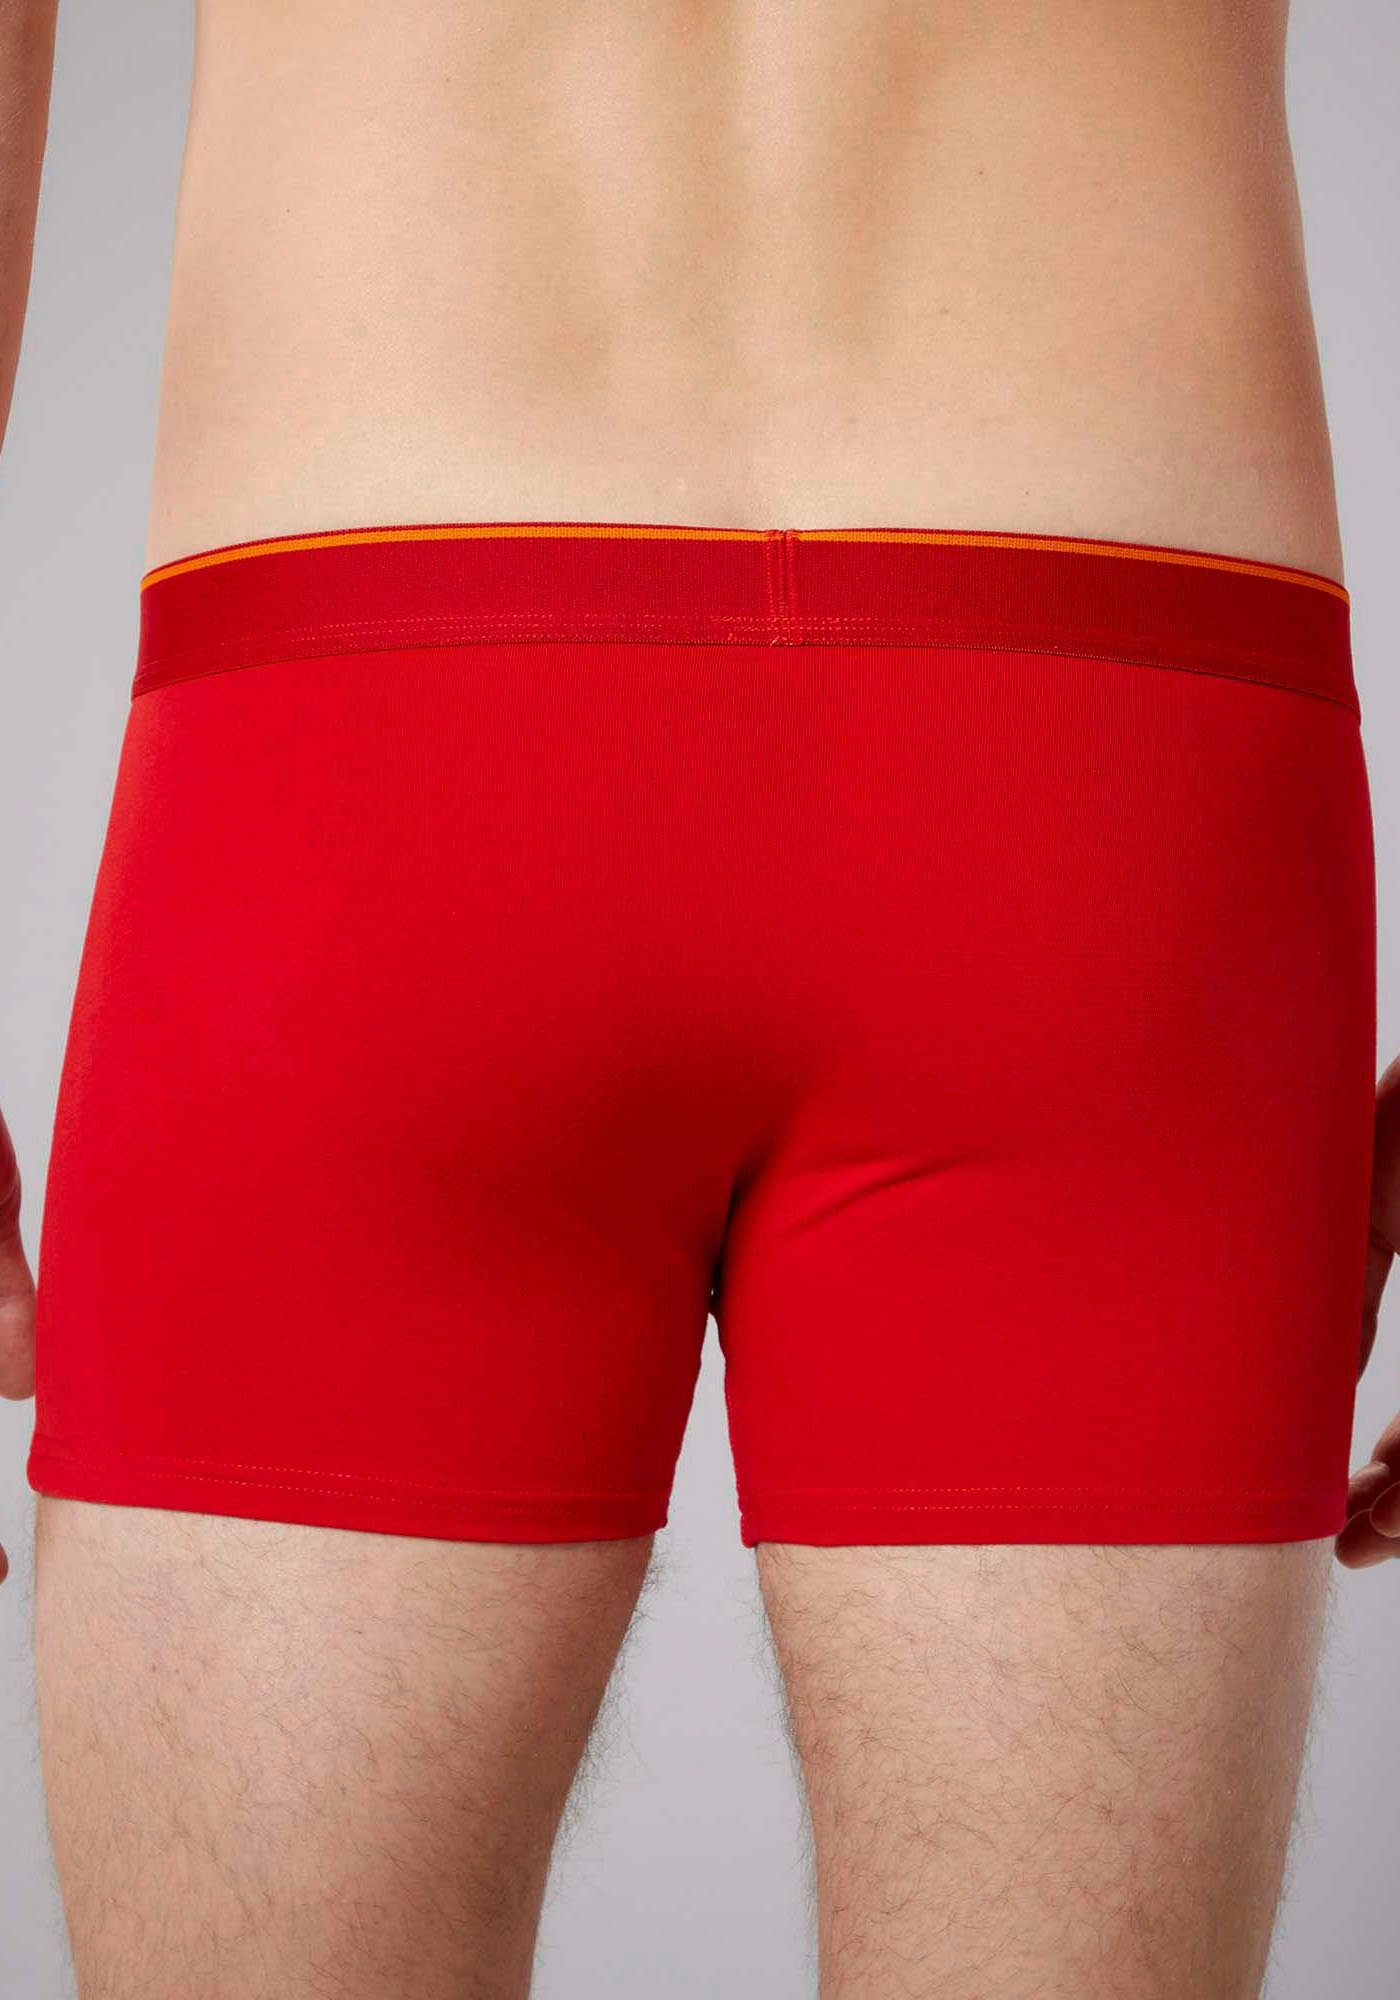 2Pack Short (Packung, 2-St) Details Kontrastfarbene Banani rot-schwarz Boxershorts Bruno Quick Access